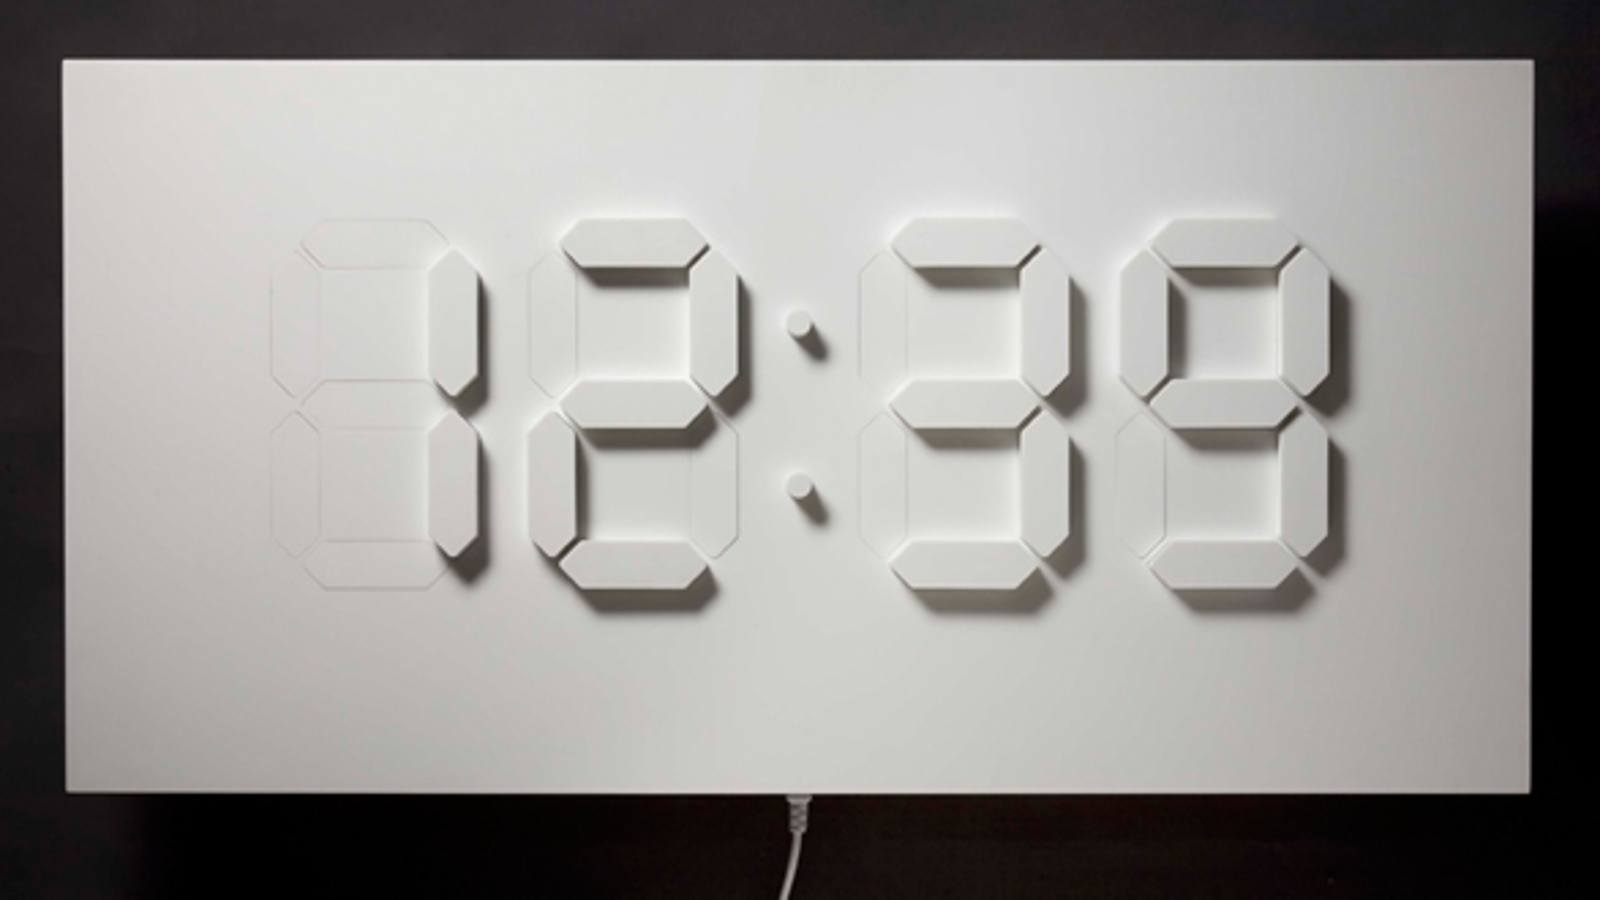 wood digital clock